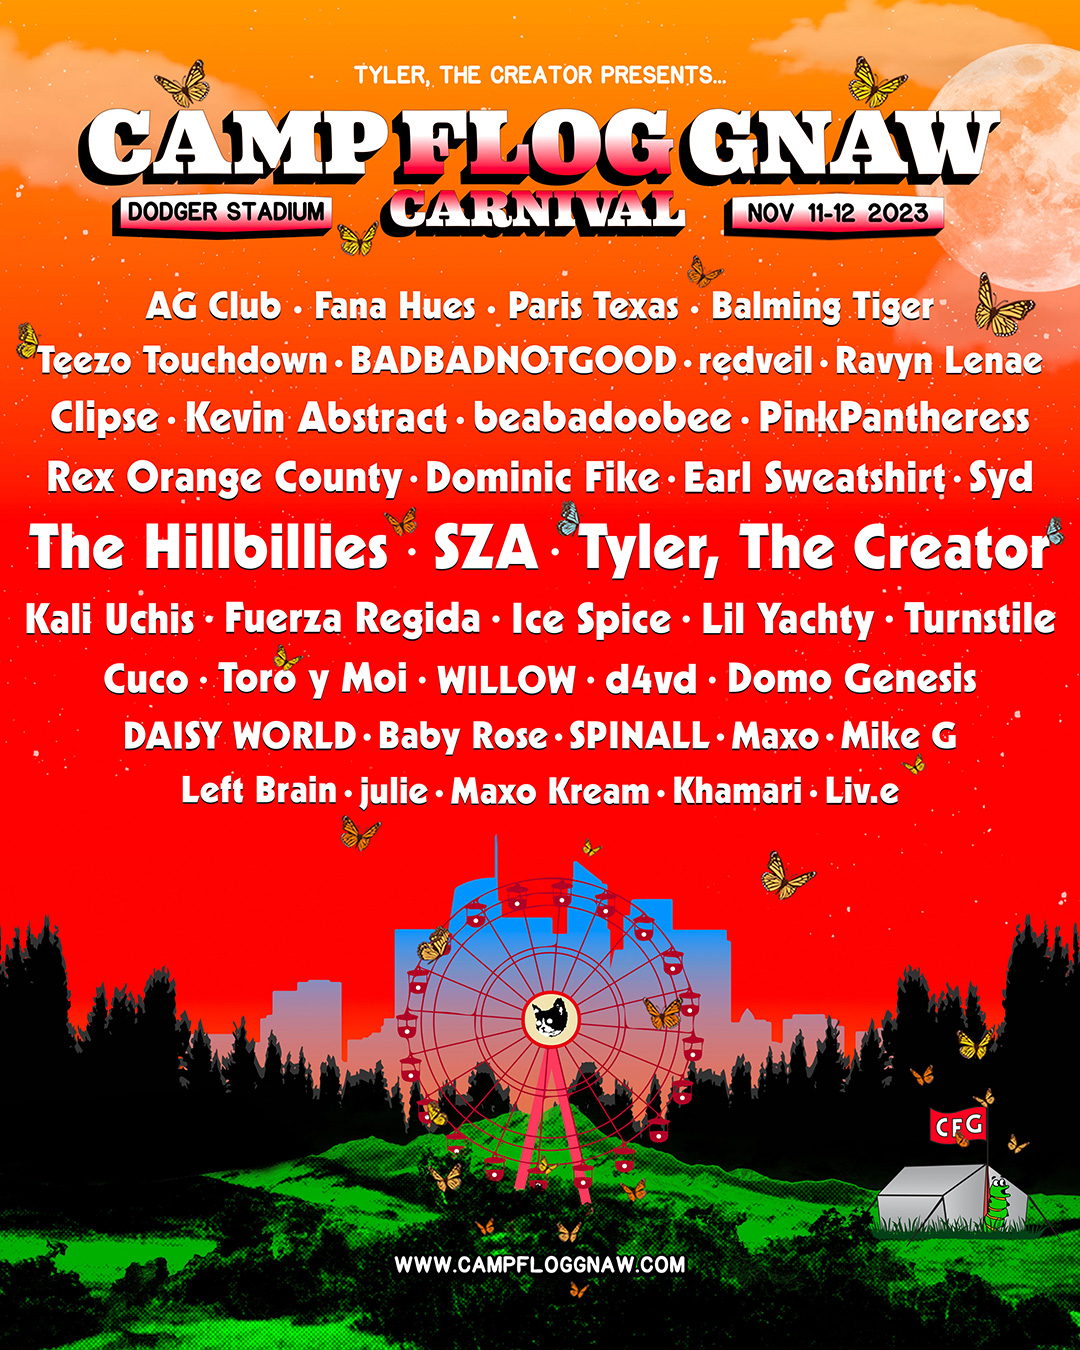 Camp Flog Gnaw Carnival 2023 poster